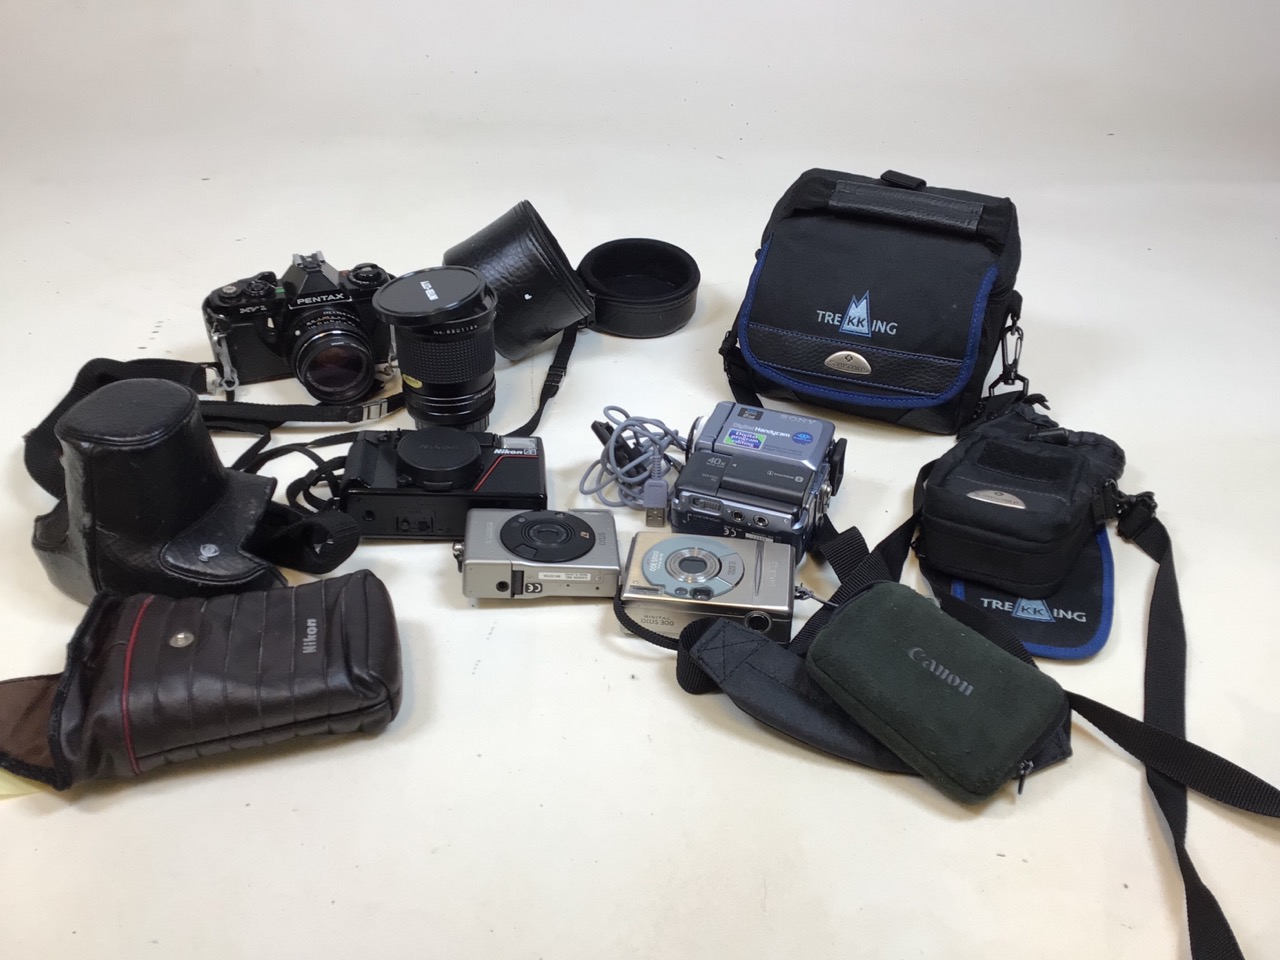 A quantity of cameras and accessories including Sony mini DV video camera, digital Canon Ixus